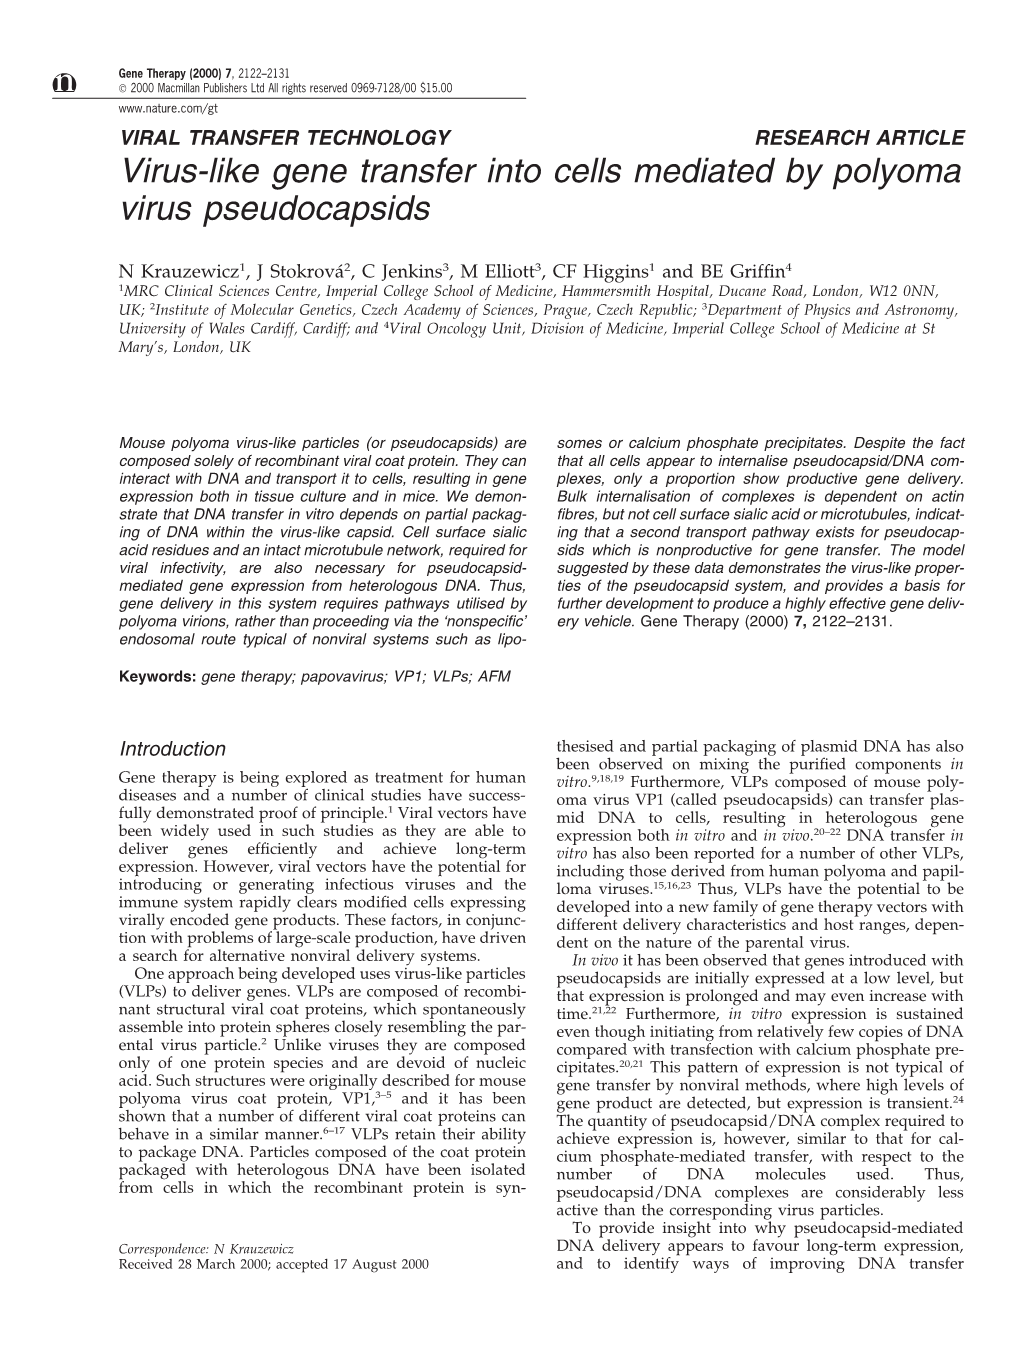 Virus-Like Gene Transfer Into Cells Mediated by Polyoma Virus Pseudocapsids